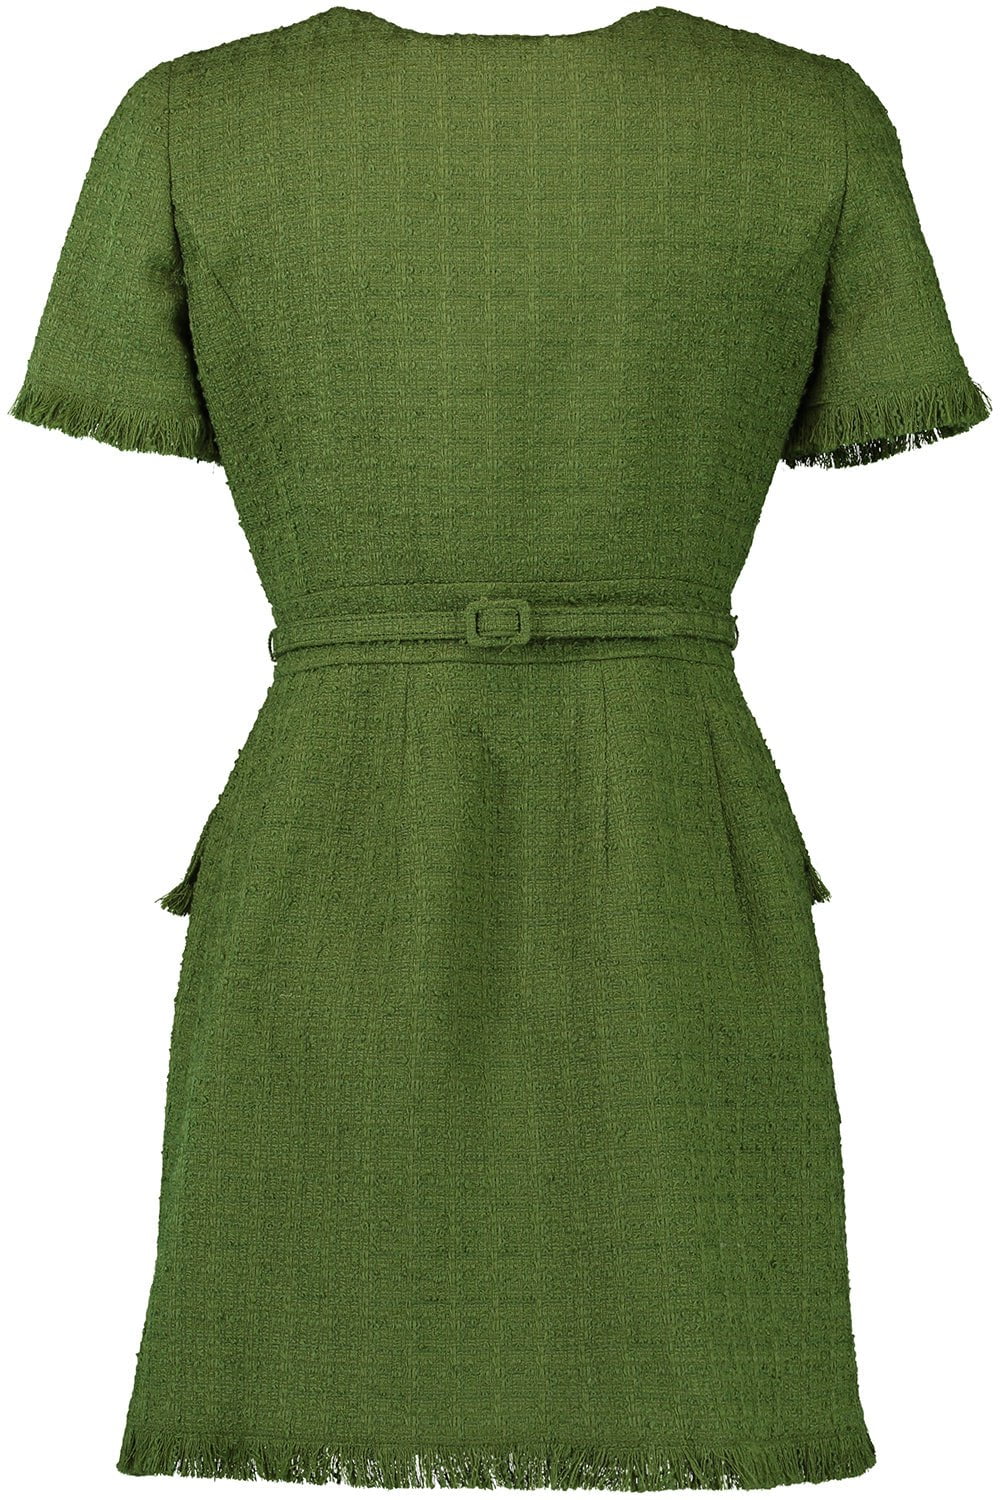 OSCAR DE LA RENTA-Short Sleeve Pocket Dress-